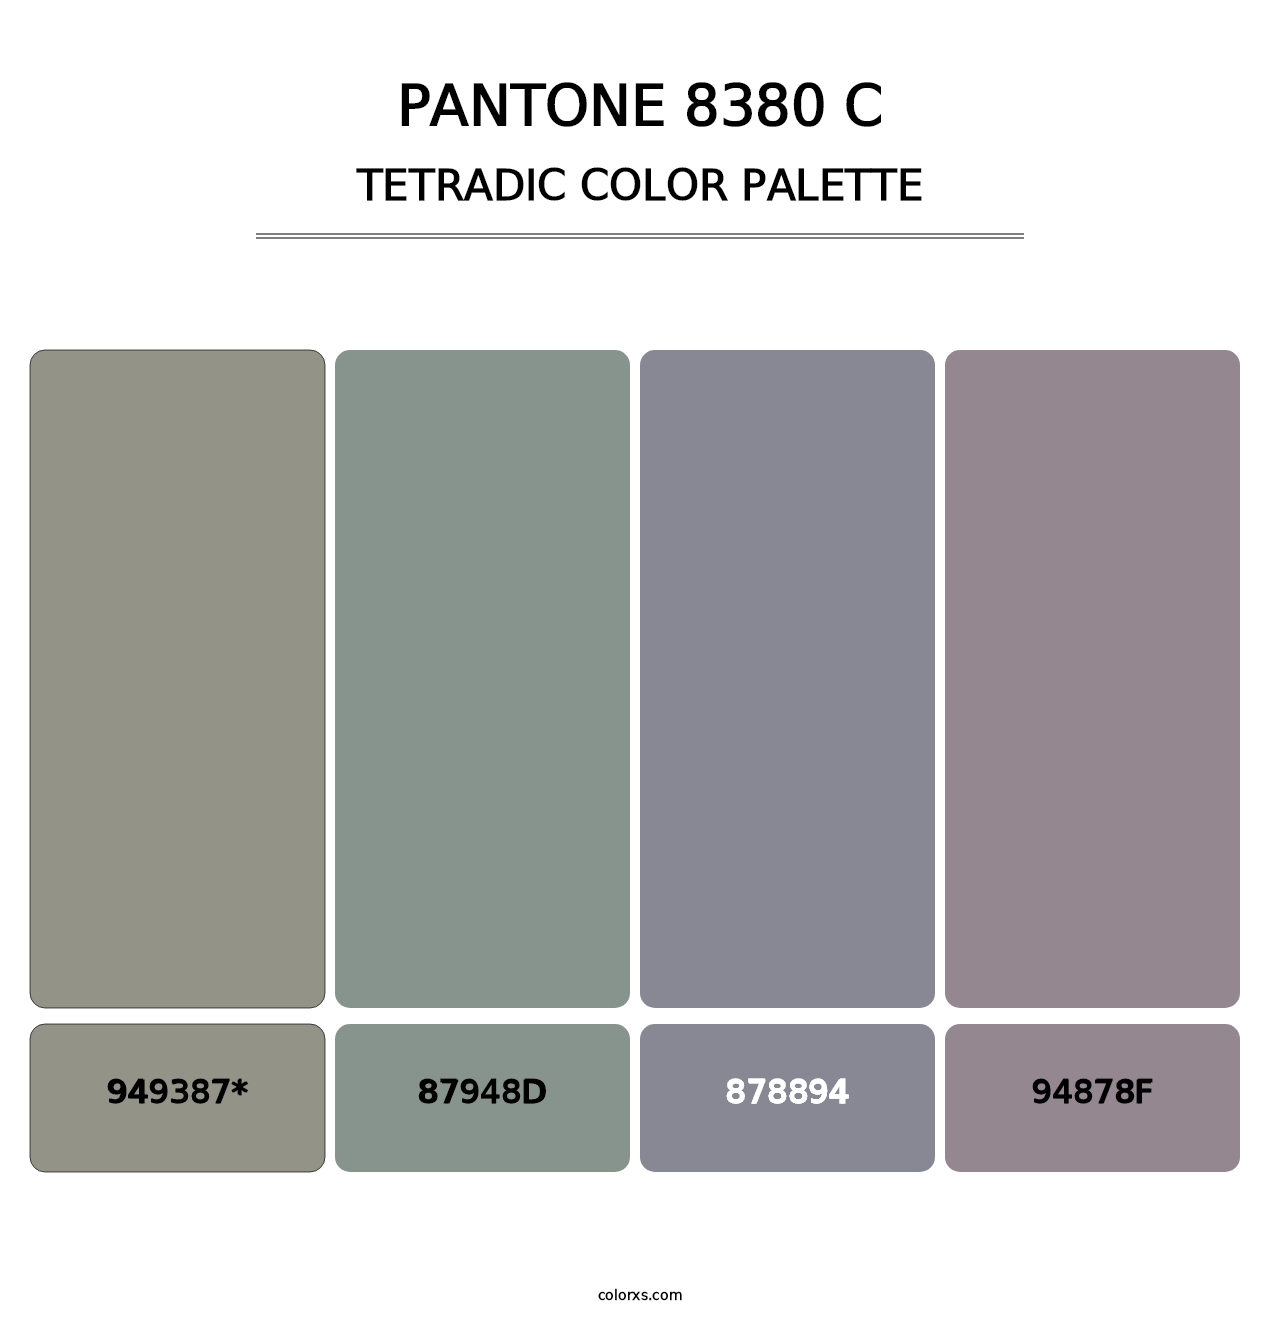 PANTONE 8380 C - Tetradic Color Palette